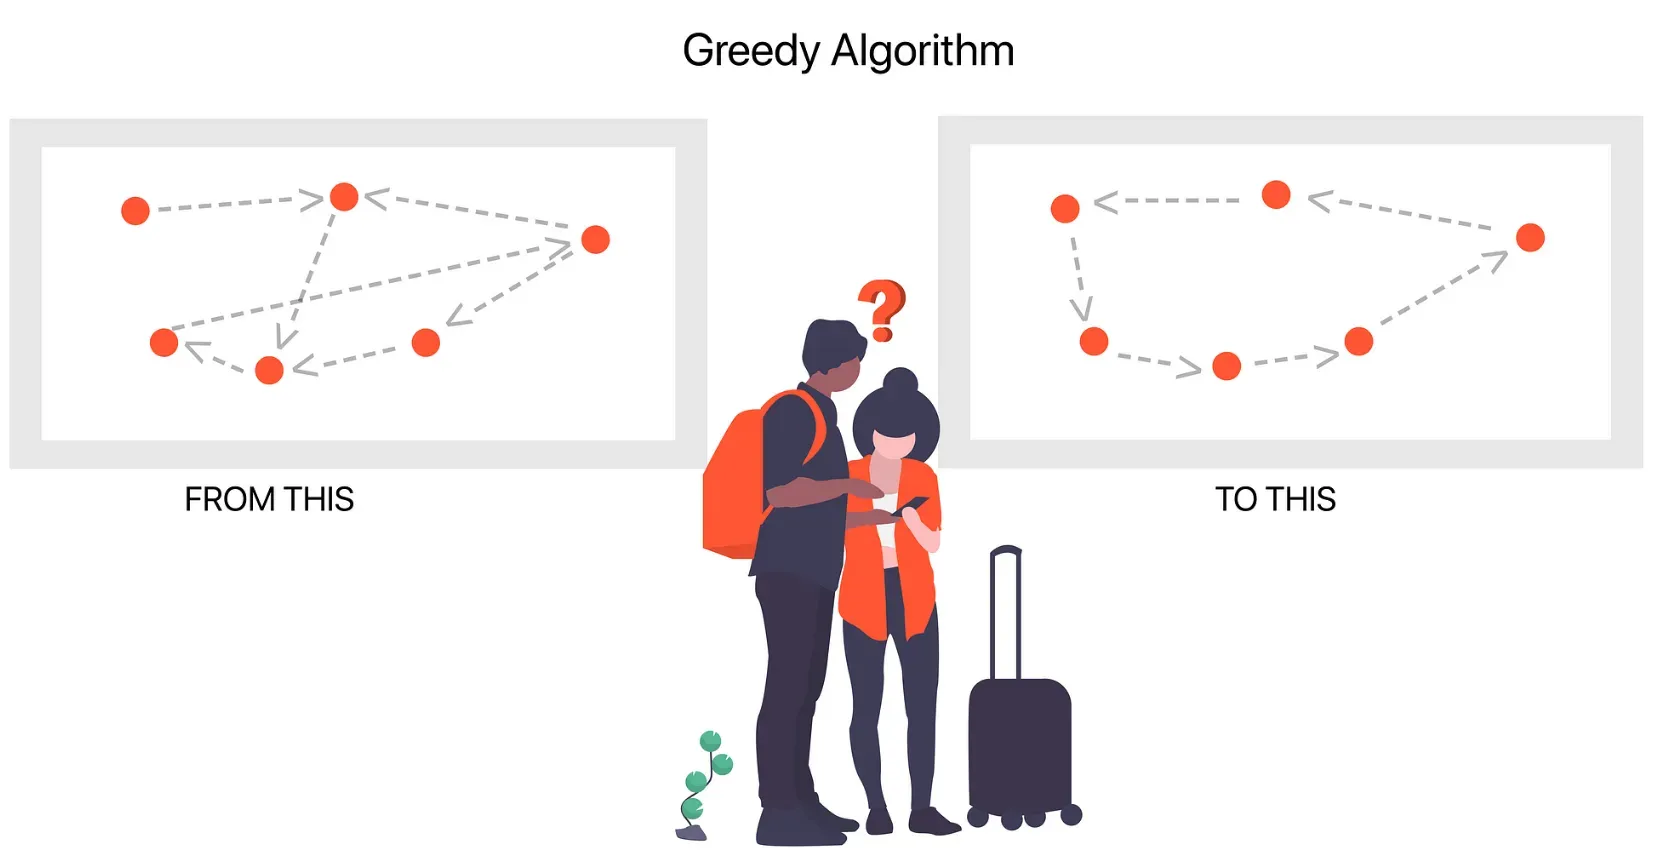 Advantages of Greedy Algorithms